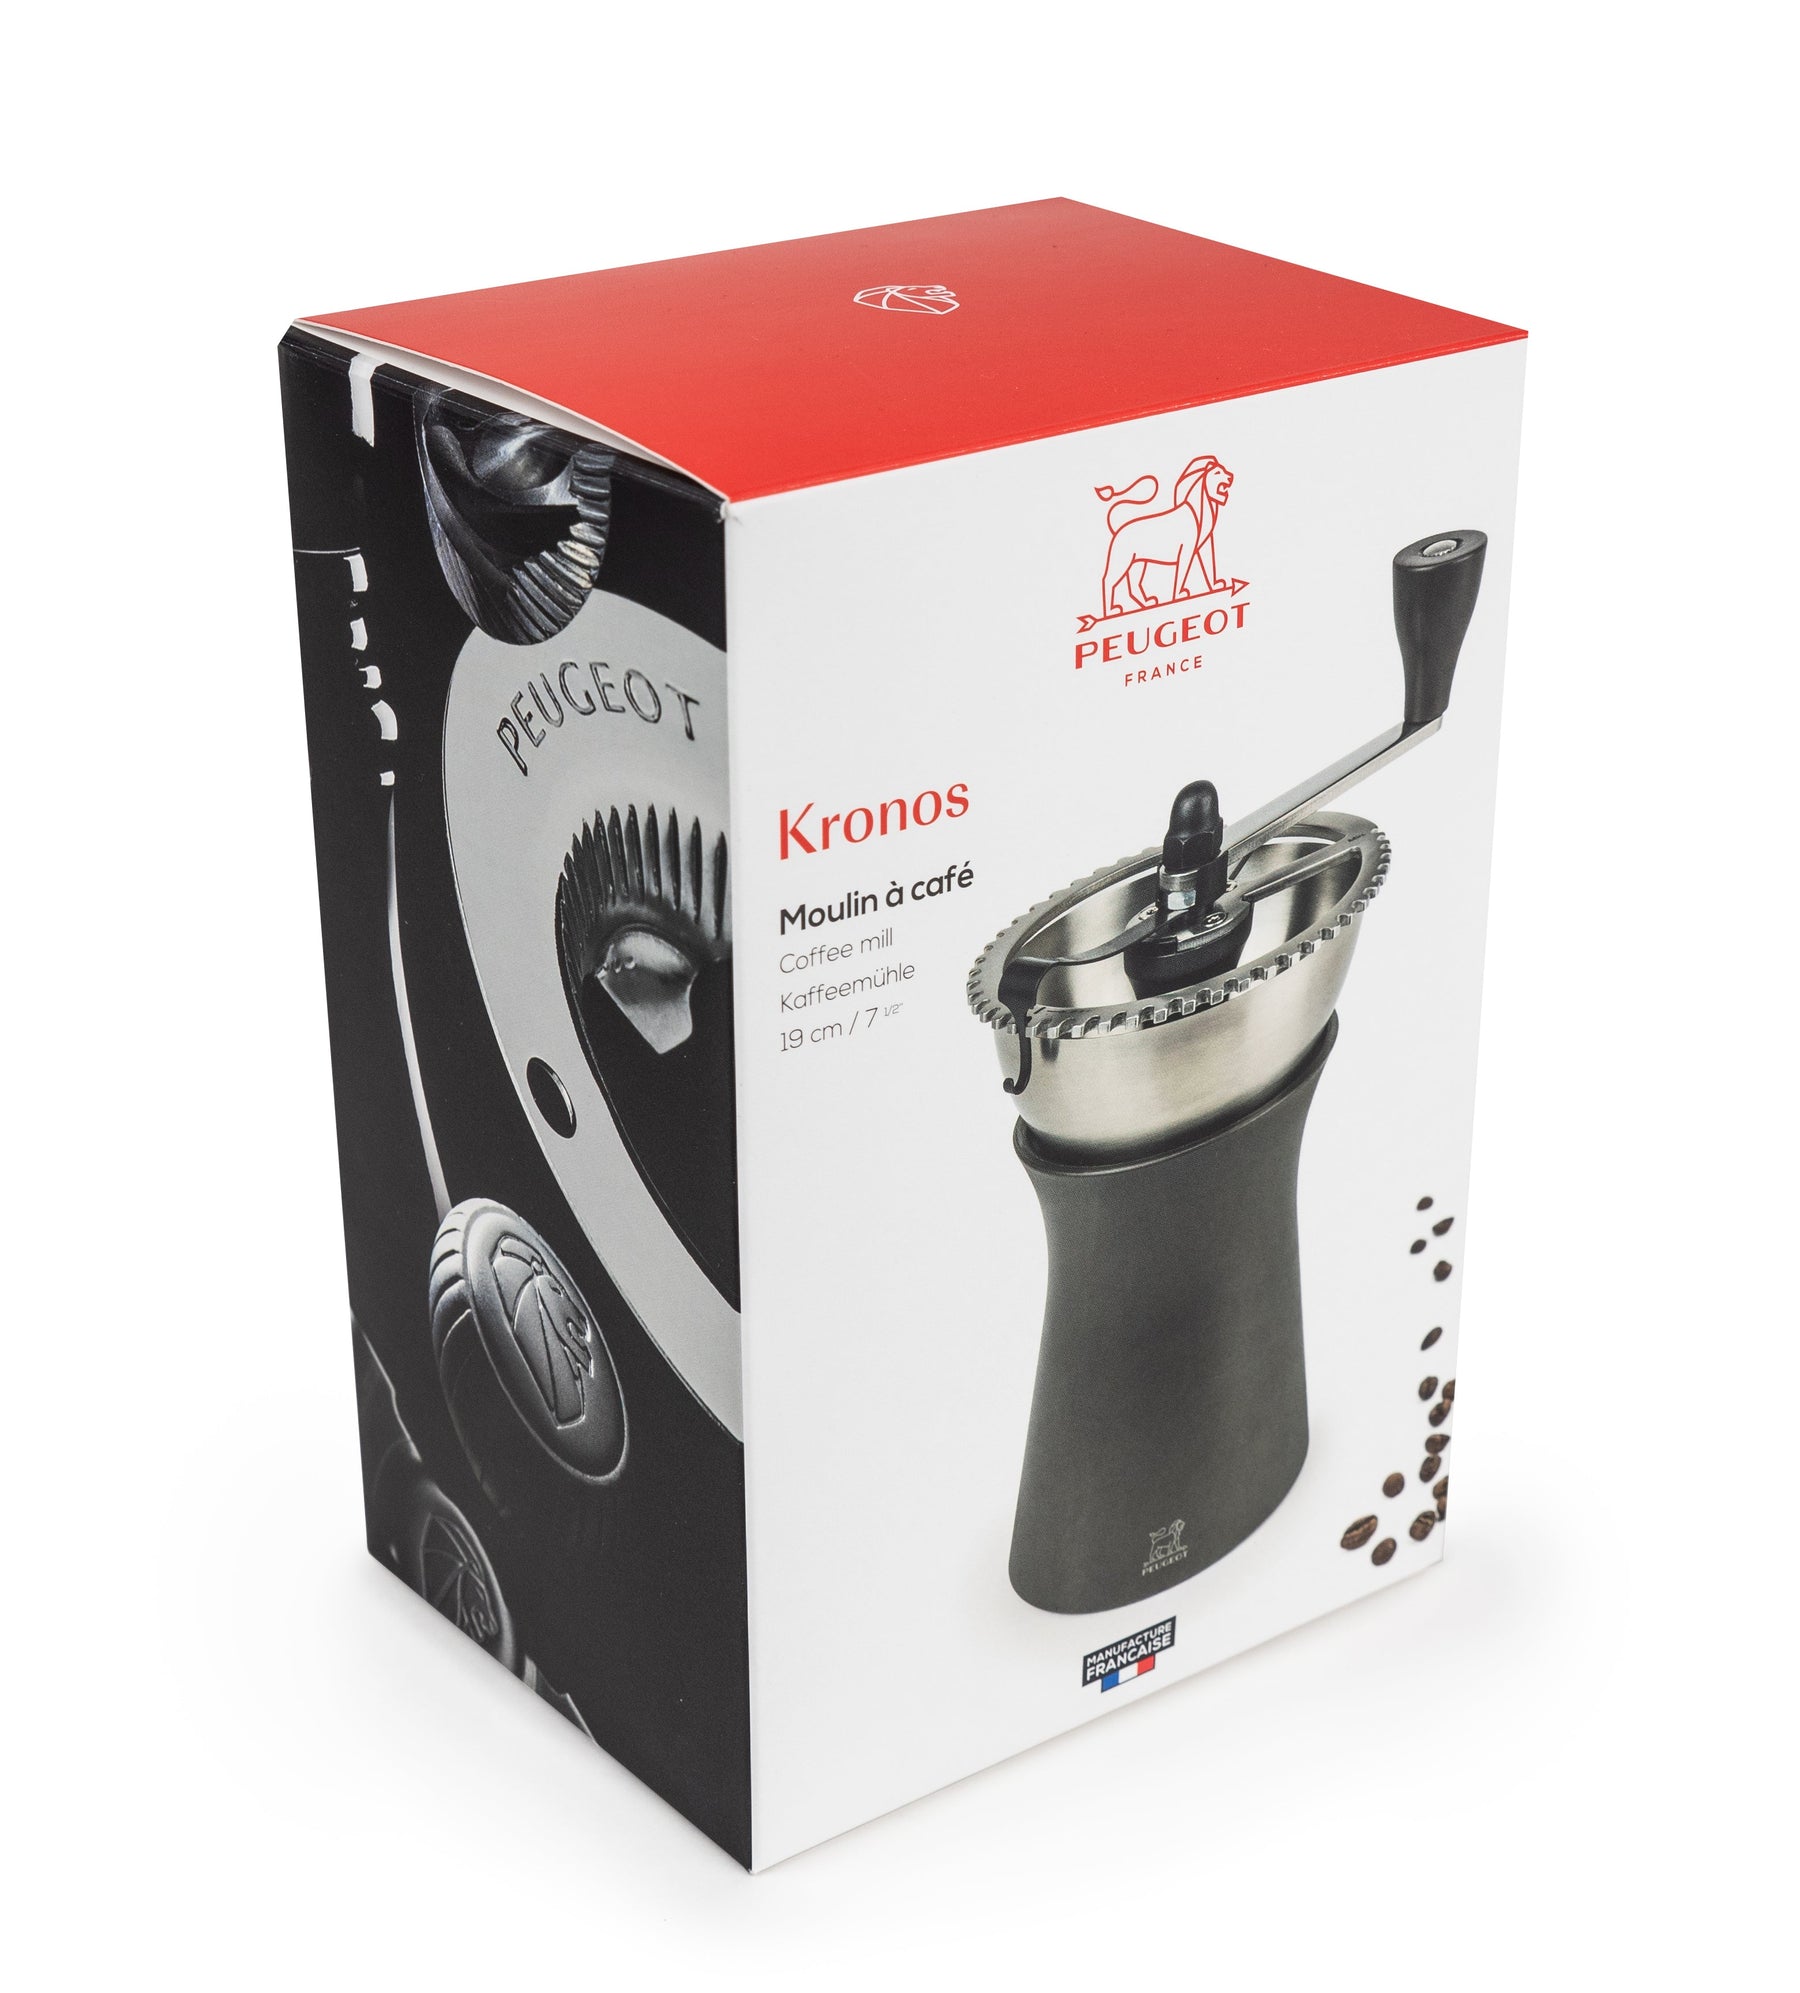 Peugeot Kaffeemühle I Kronos commercial Peugeot 